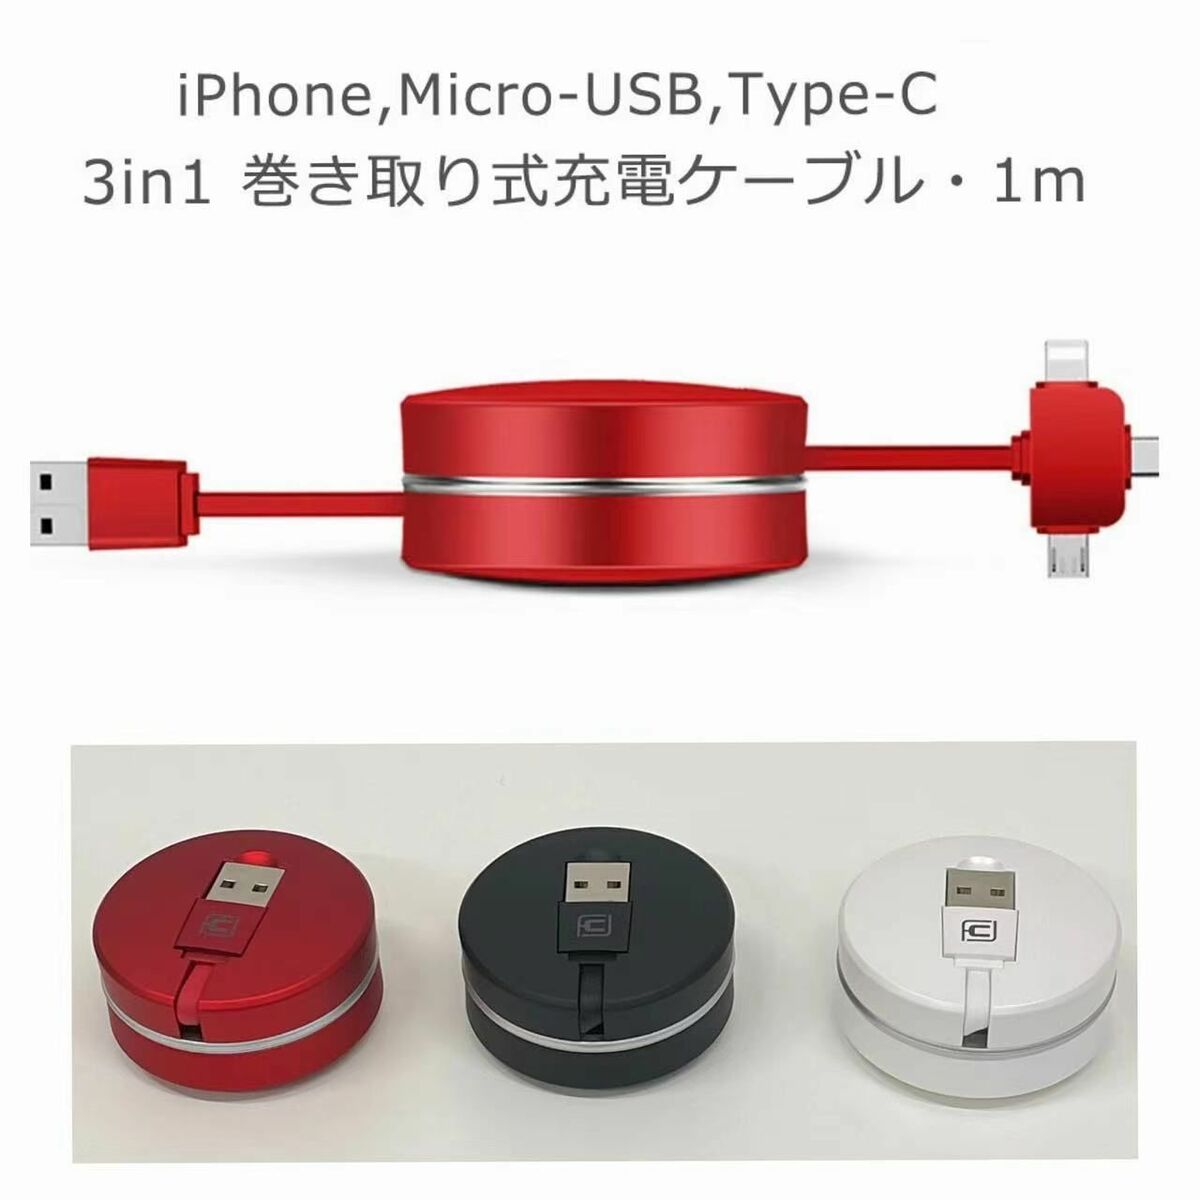 Rakuten 急速充電 充電ケーブル 3in1 巻き取り ケーブル iPhone 充電 Type-c 巻取り式 android XS MAX  2.1A コンパクト スタンド付き